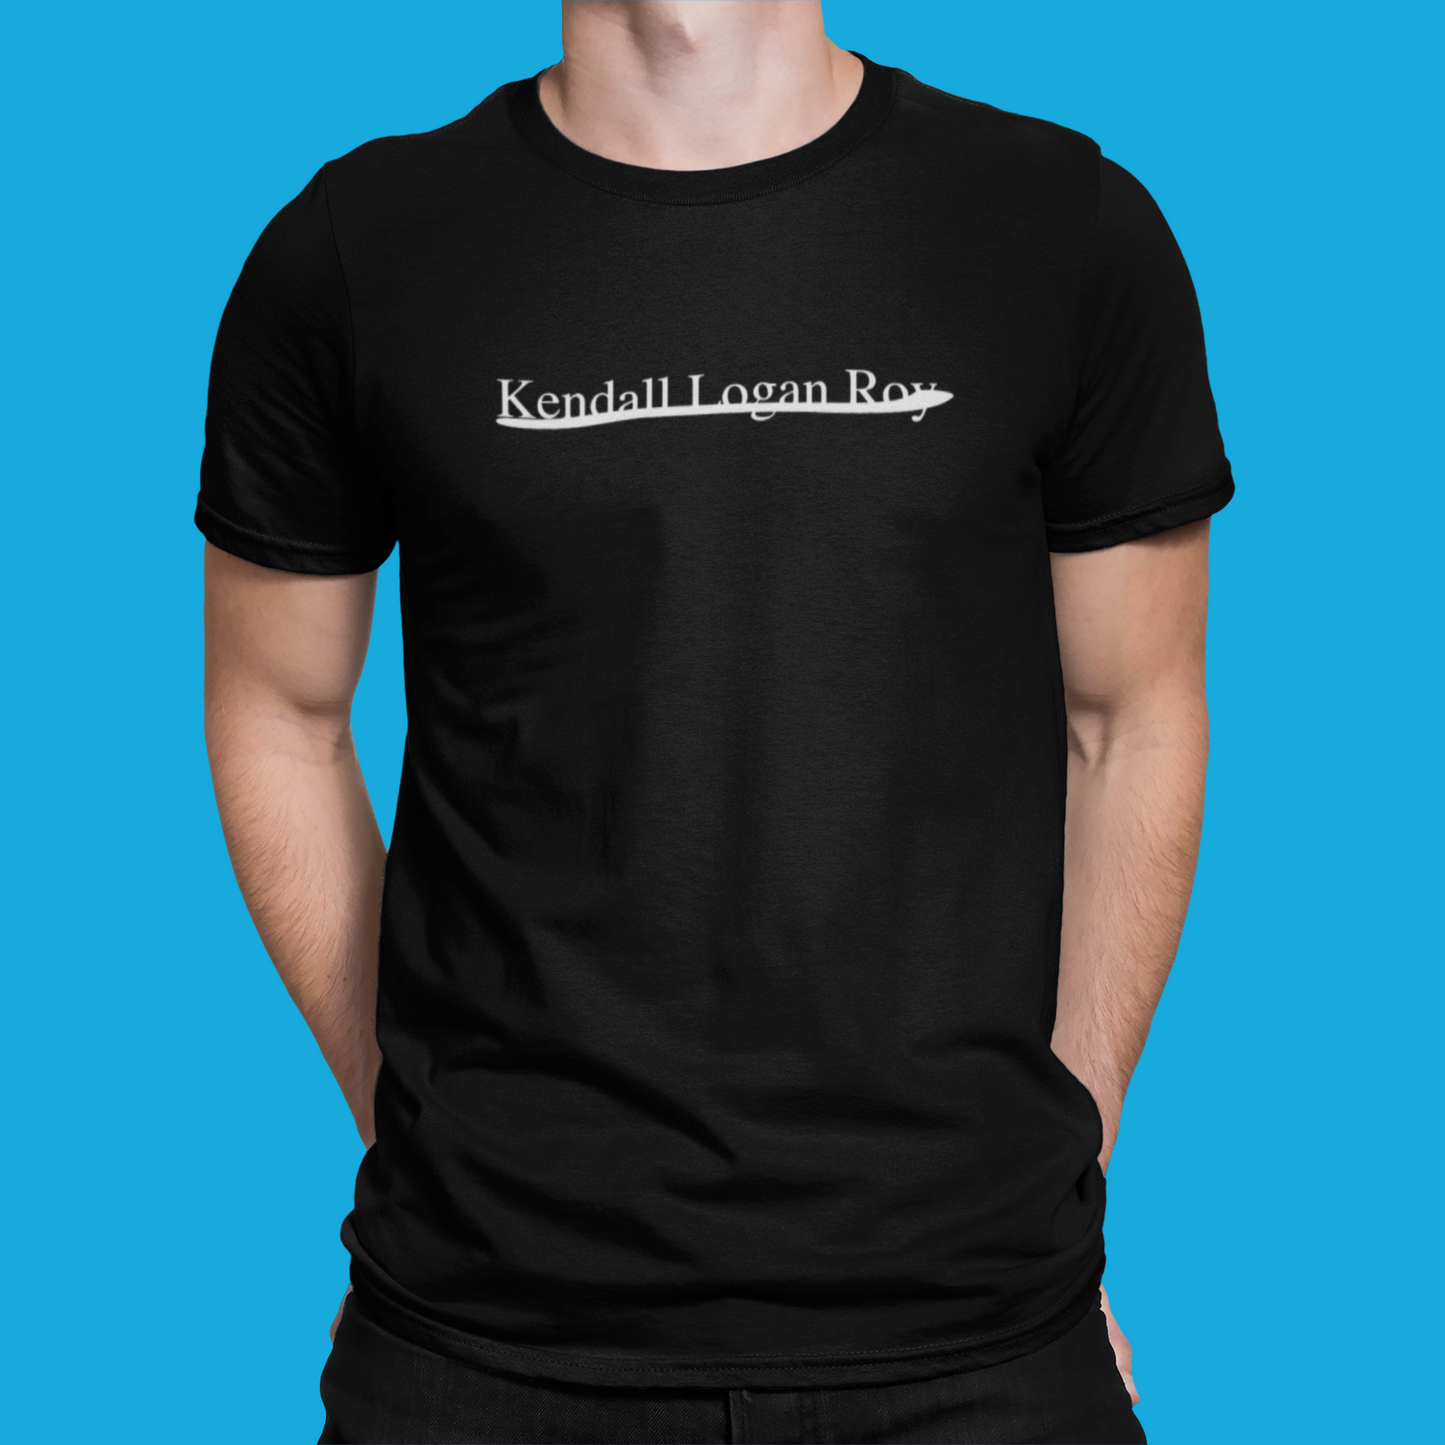 Camiseta "Kendall Logan Roy" - Succession - Séries de TV